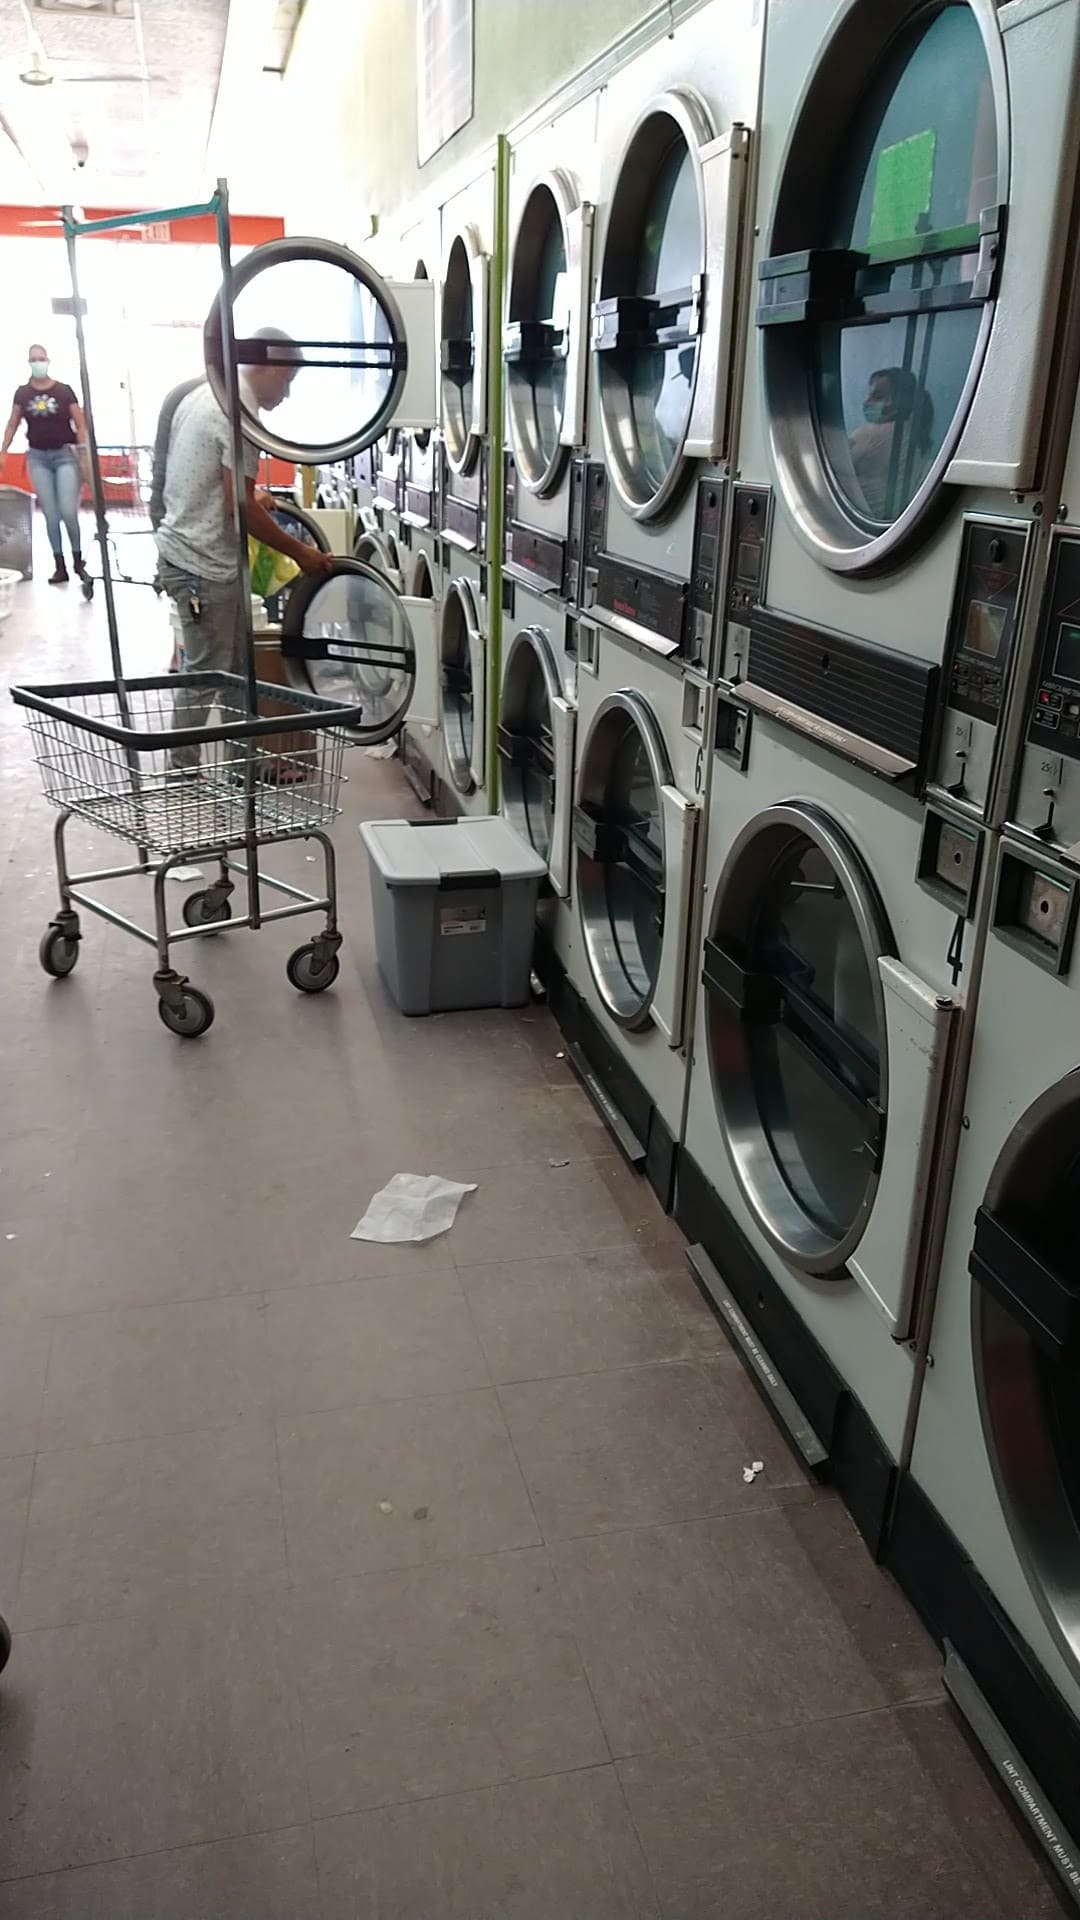 Lavanderia Maverick - Alamo, TX, US, 24 hour laundry near me